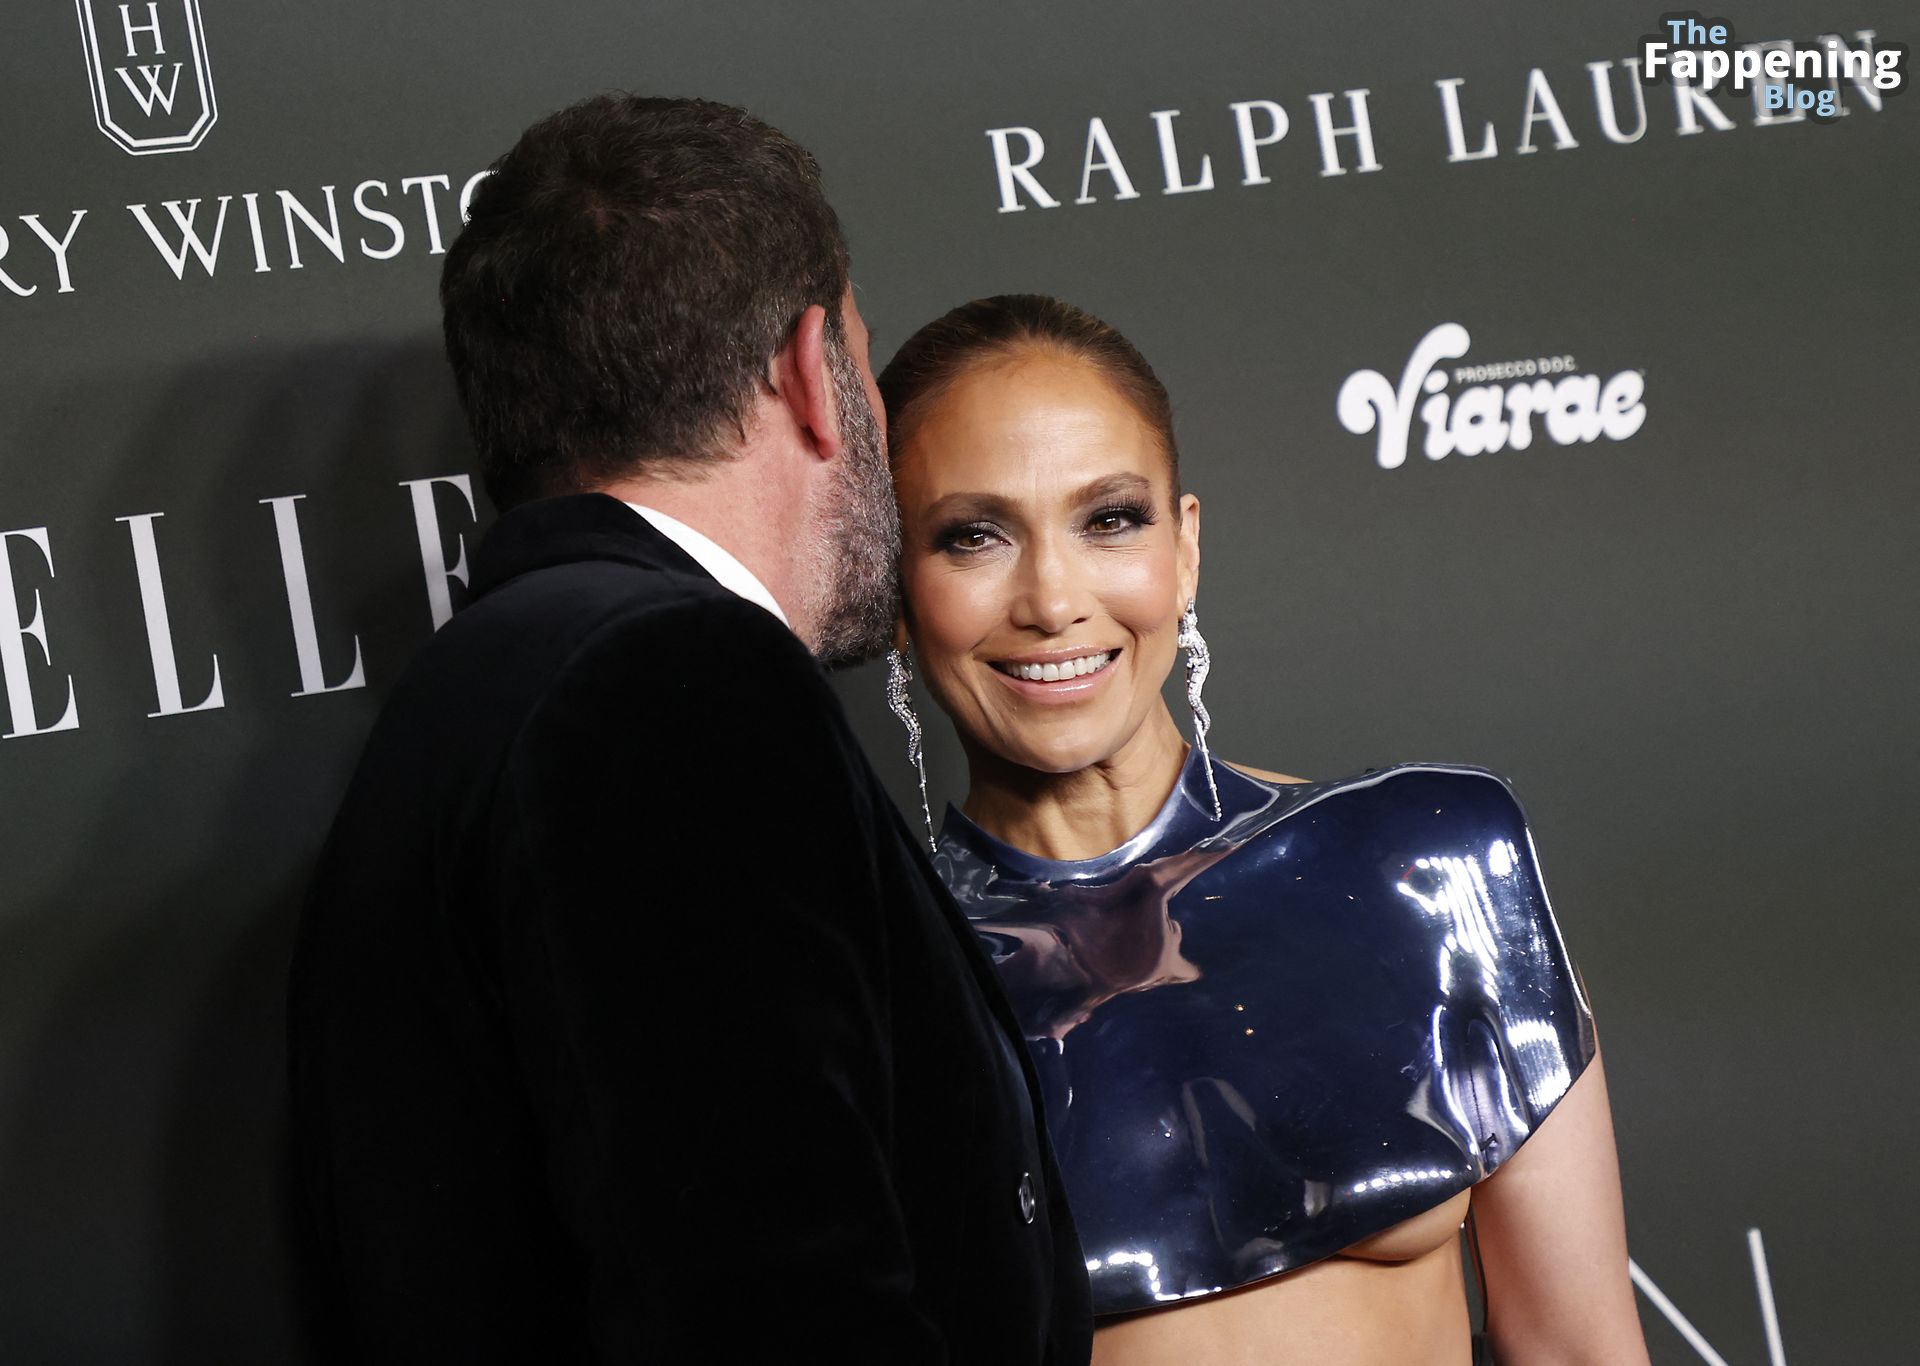 Jennifer-Lopez-Sexy-44-The-Fappening-Blog.jpg